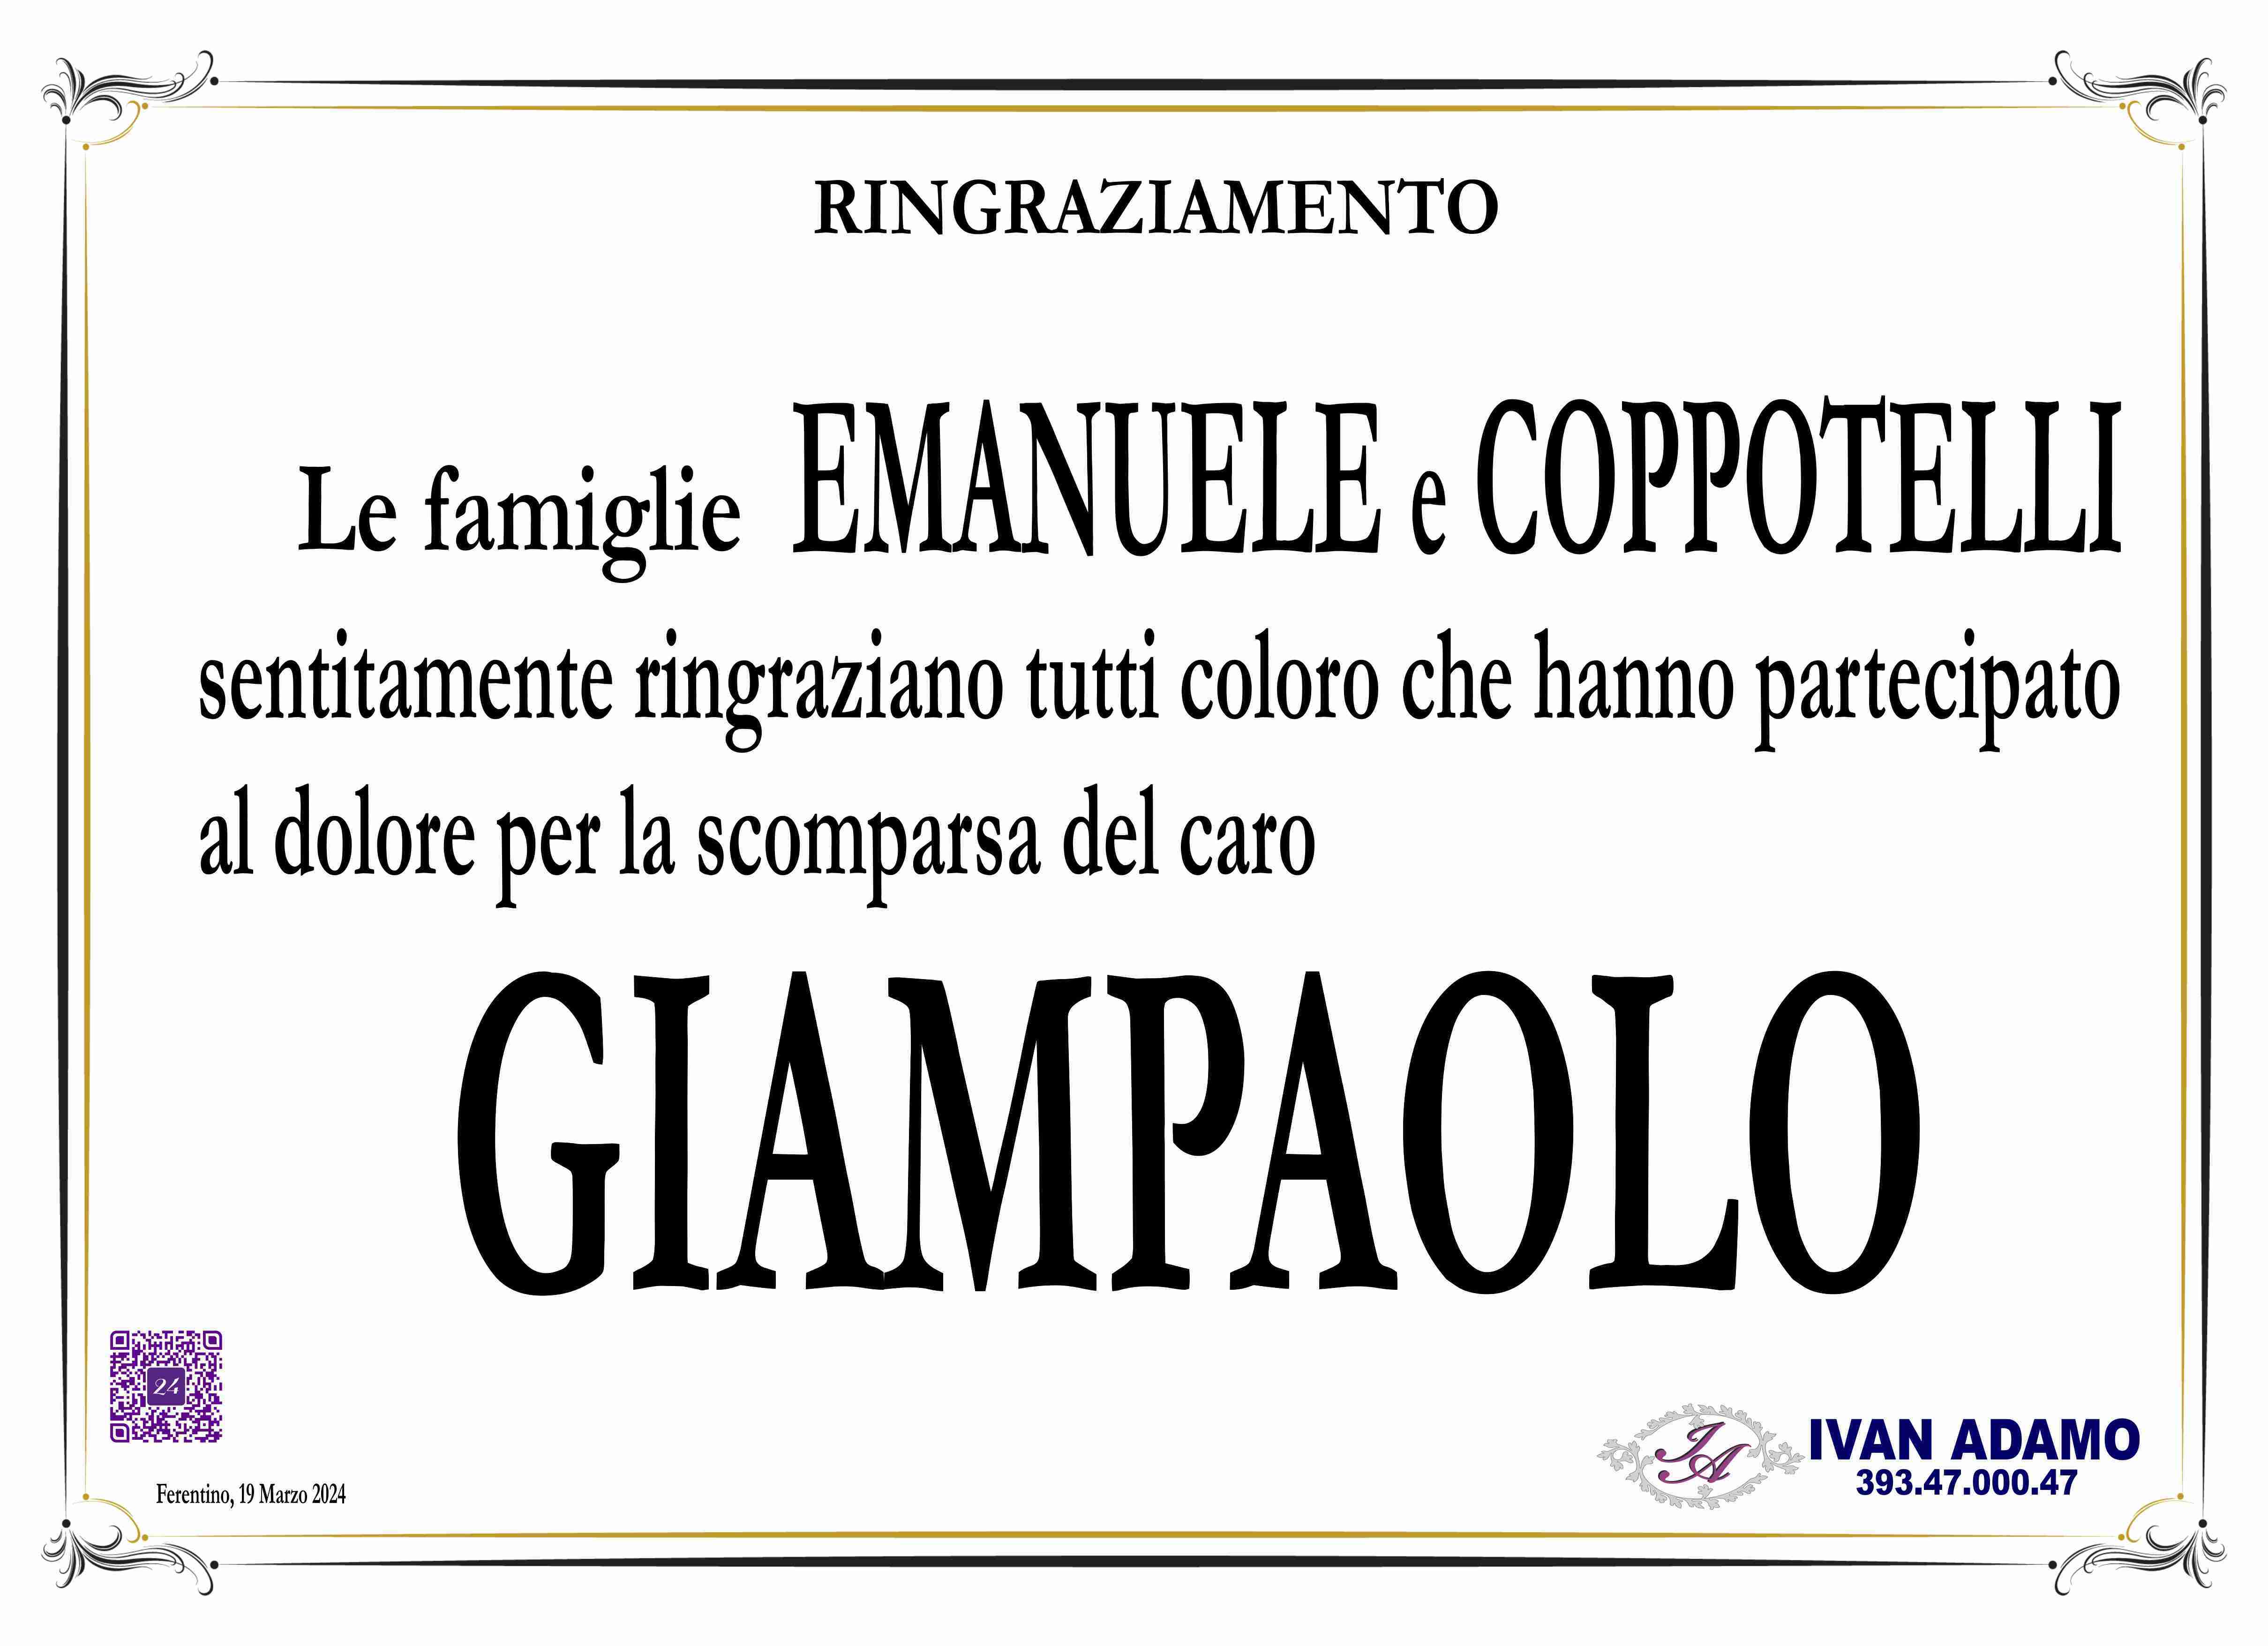 Giampaolo Emanuele